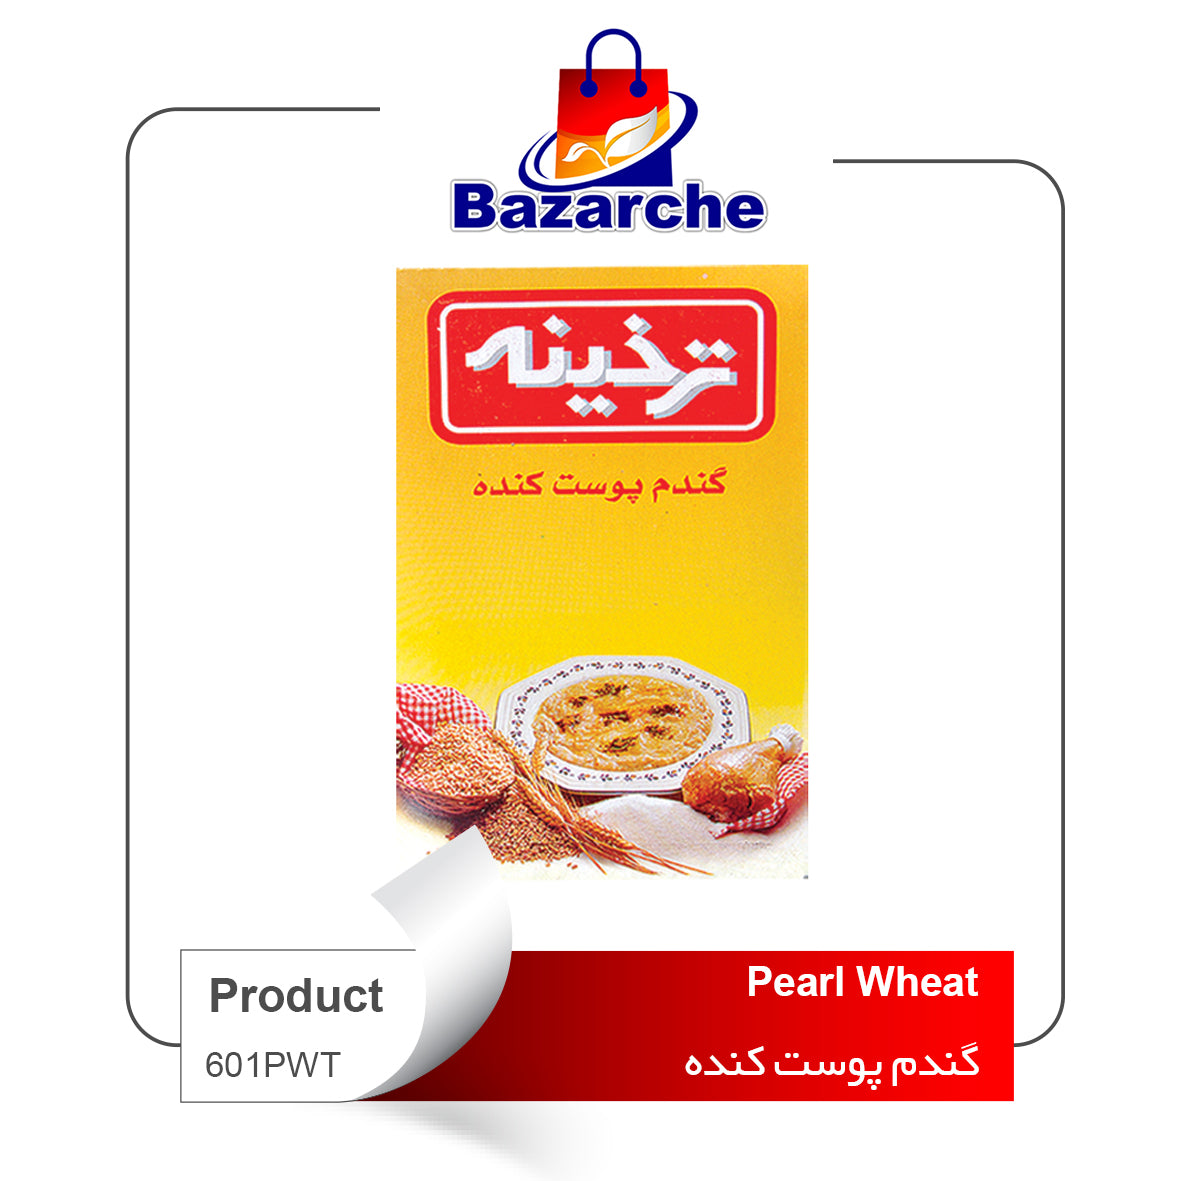 Pearl Wheat (گندم پوست کنده)